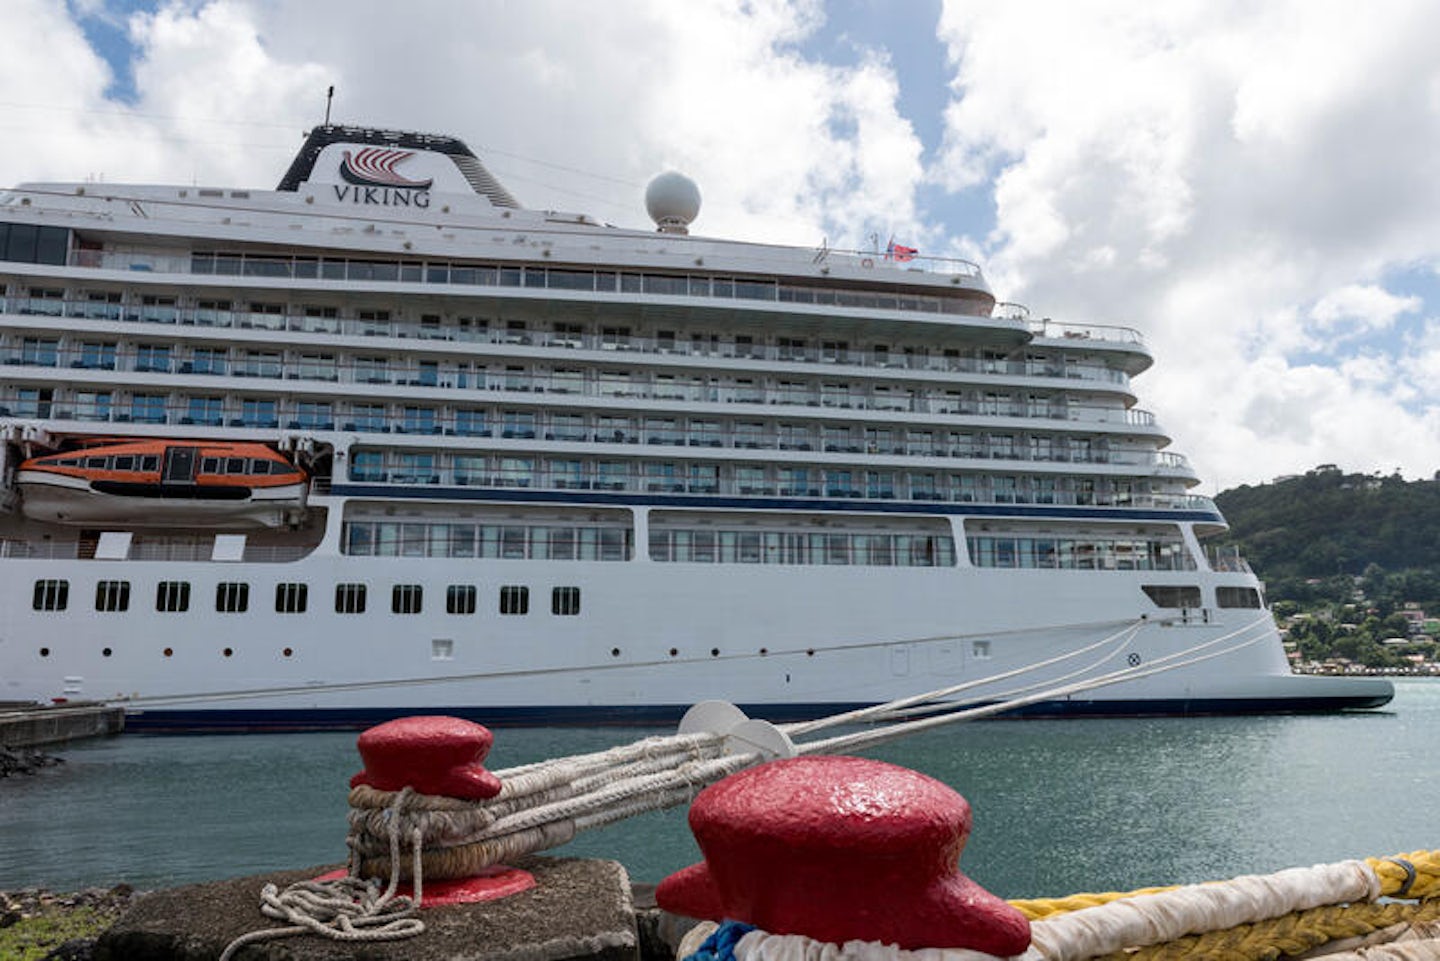 Castries Cruise Port